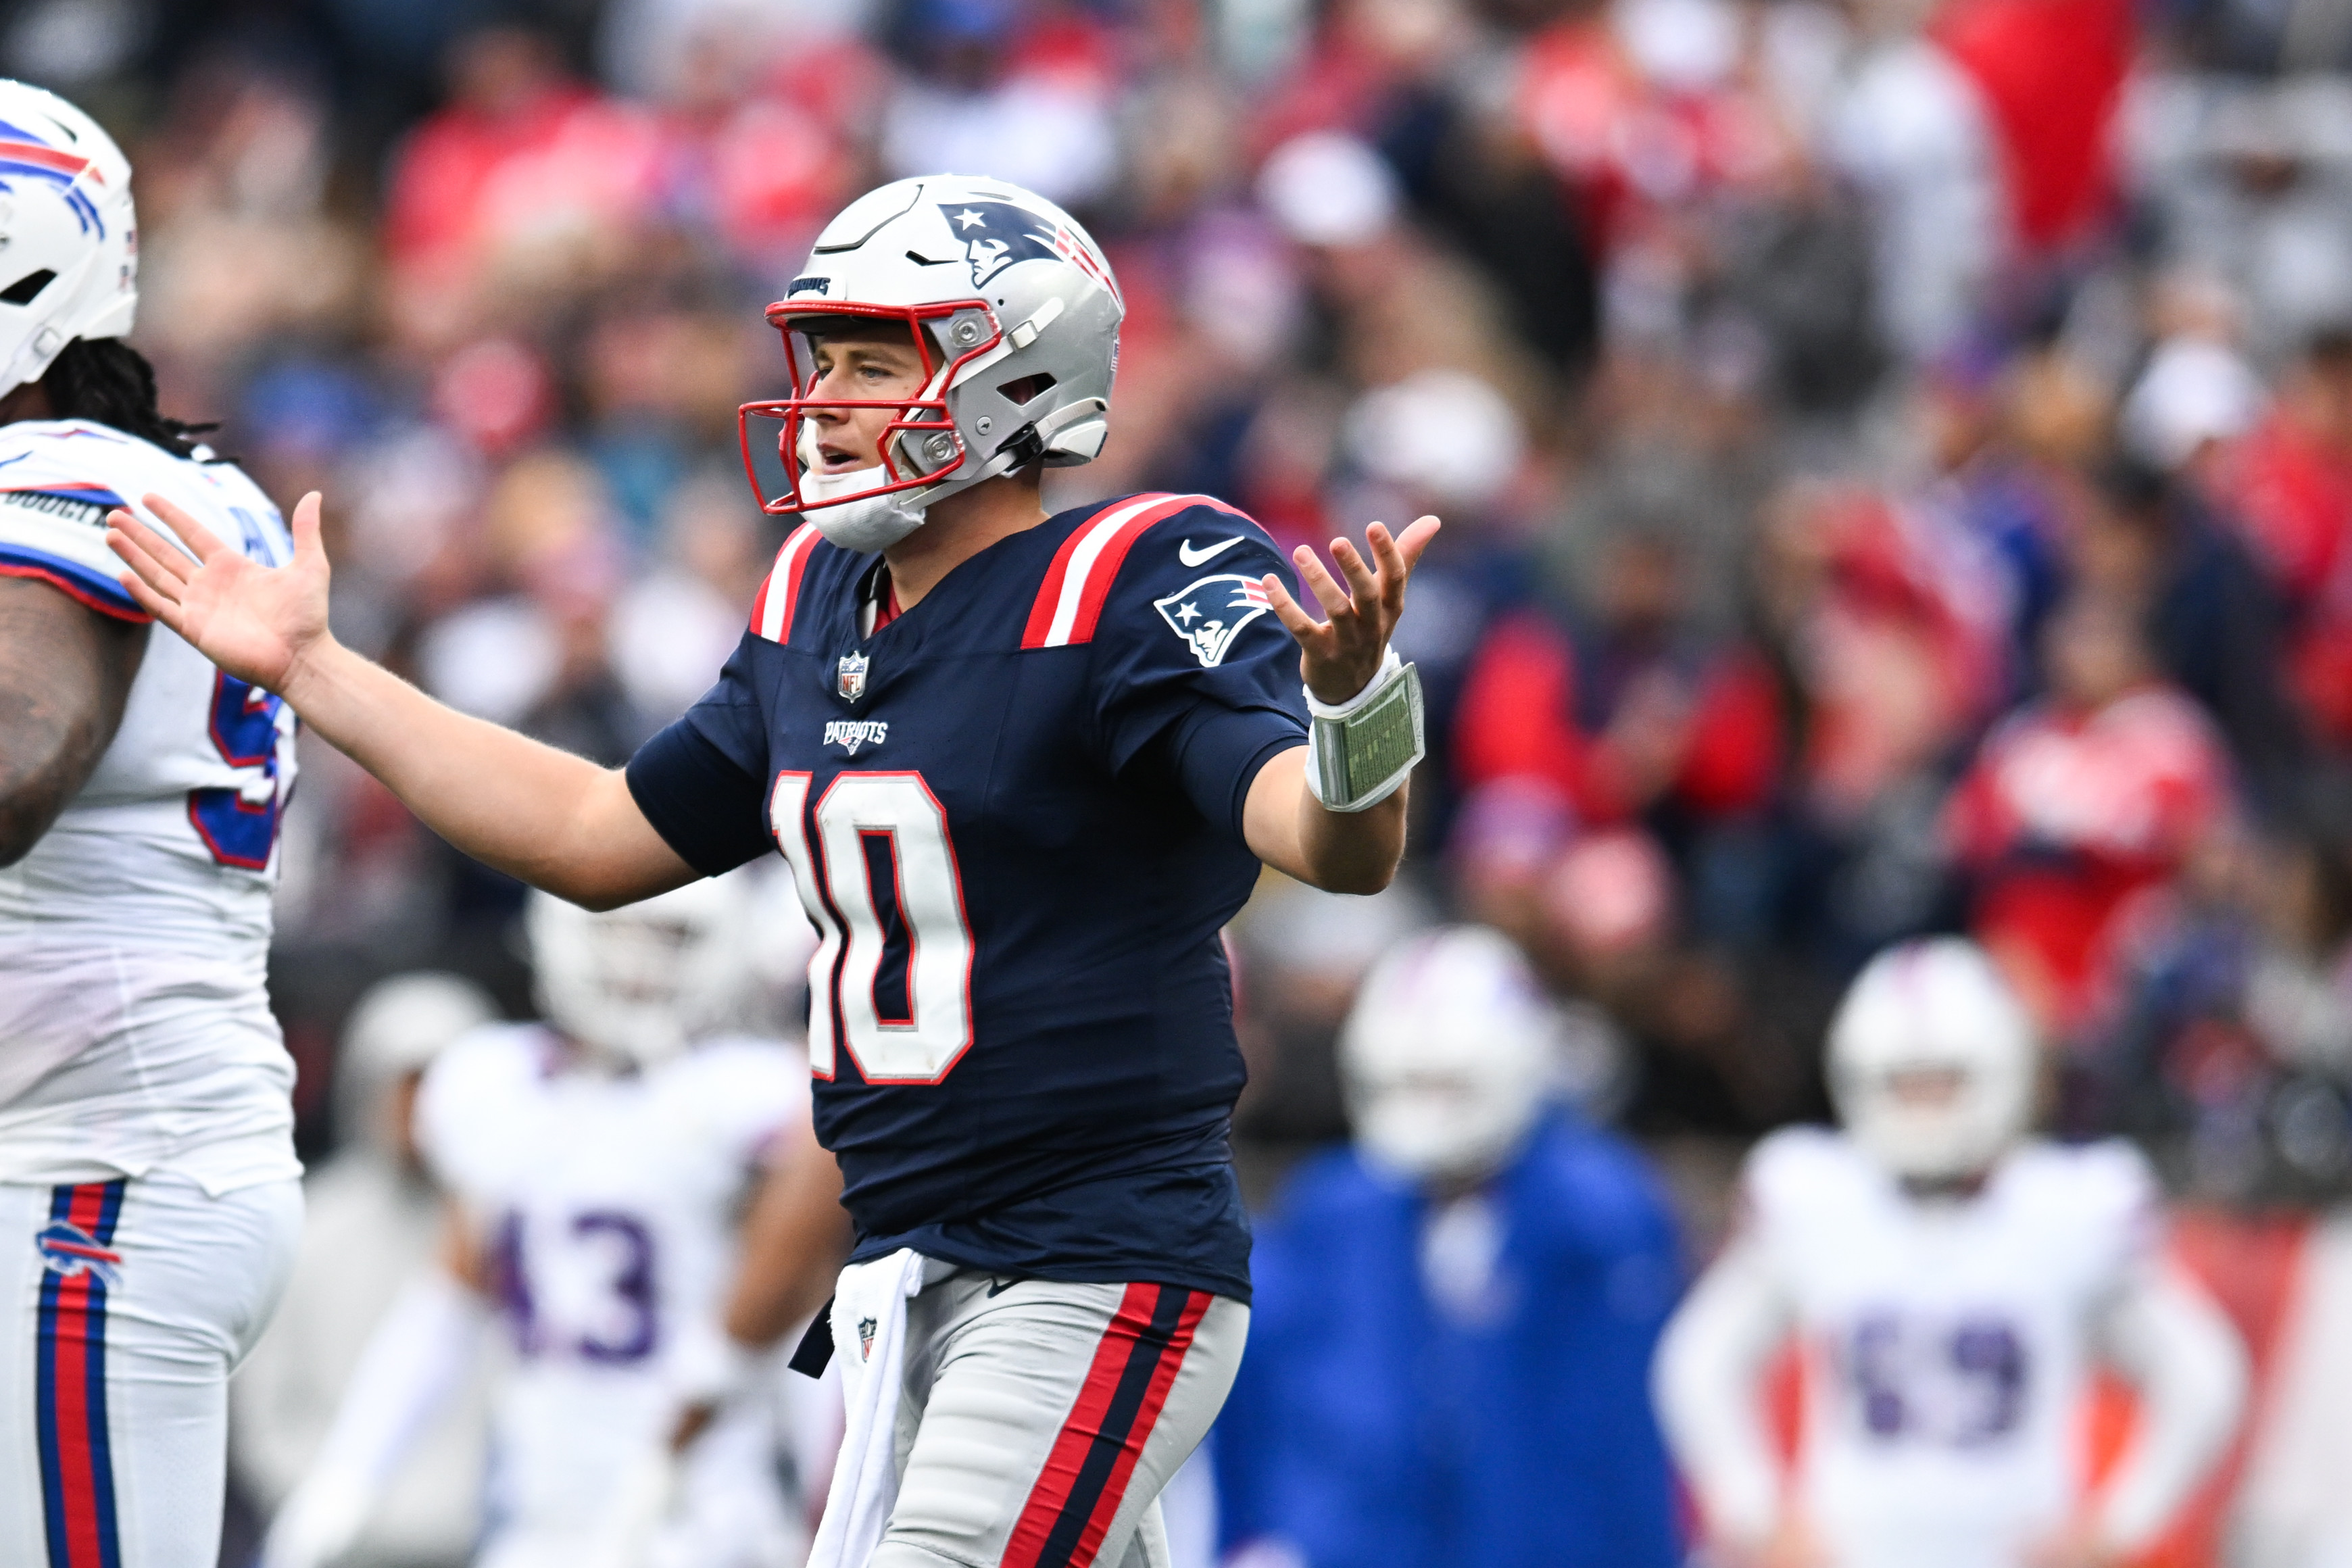 Tom Brady's stolen Super Bowl jersey found in possession of international  media member - ESPN